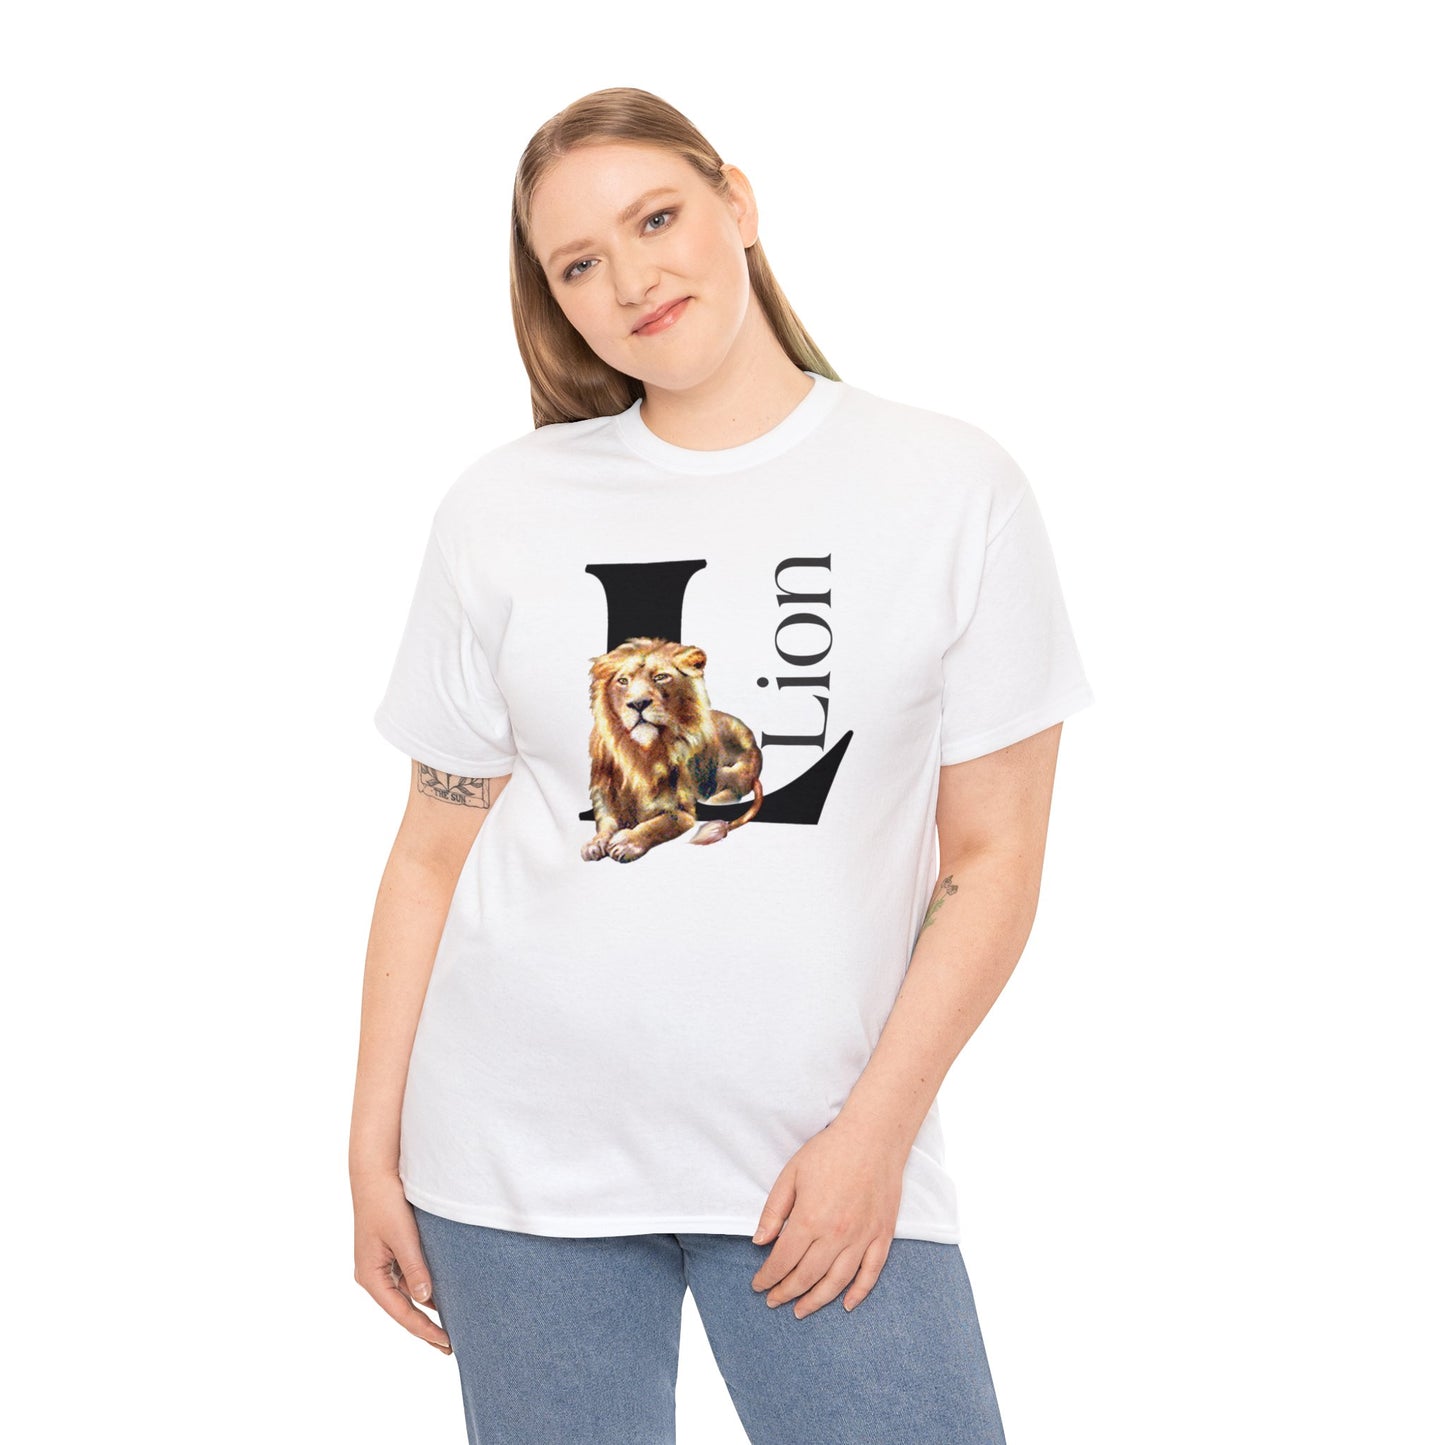 L is for Lion T-Shirt, Lion Drawing T-Shirt, Illustration of Lion, Proud Lion animal t-shirt